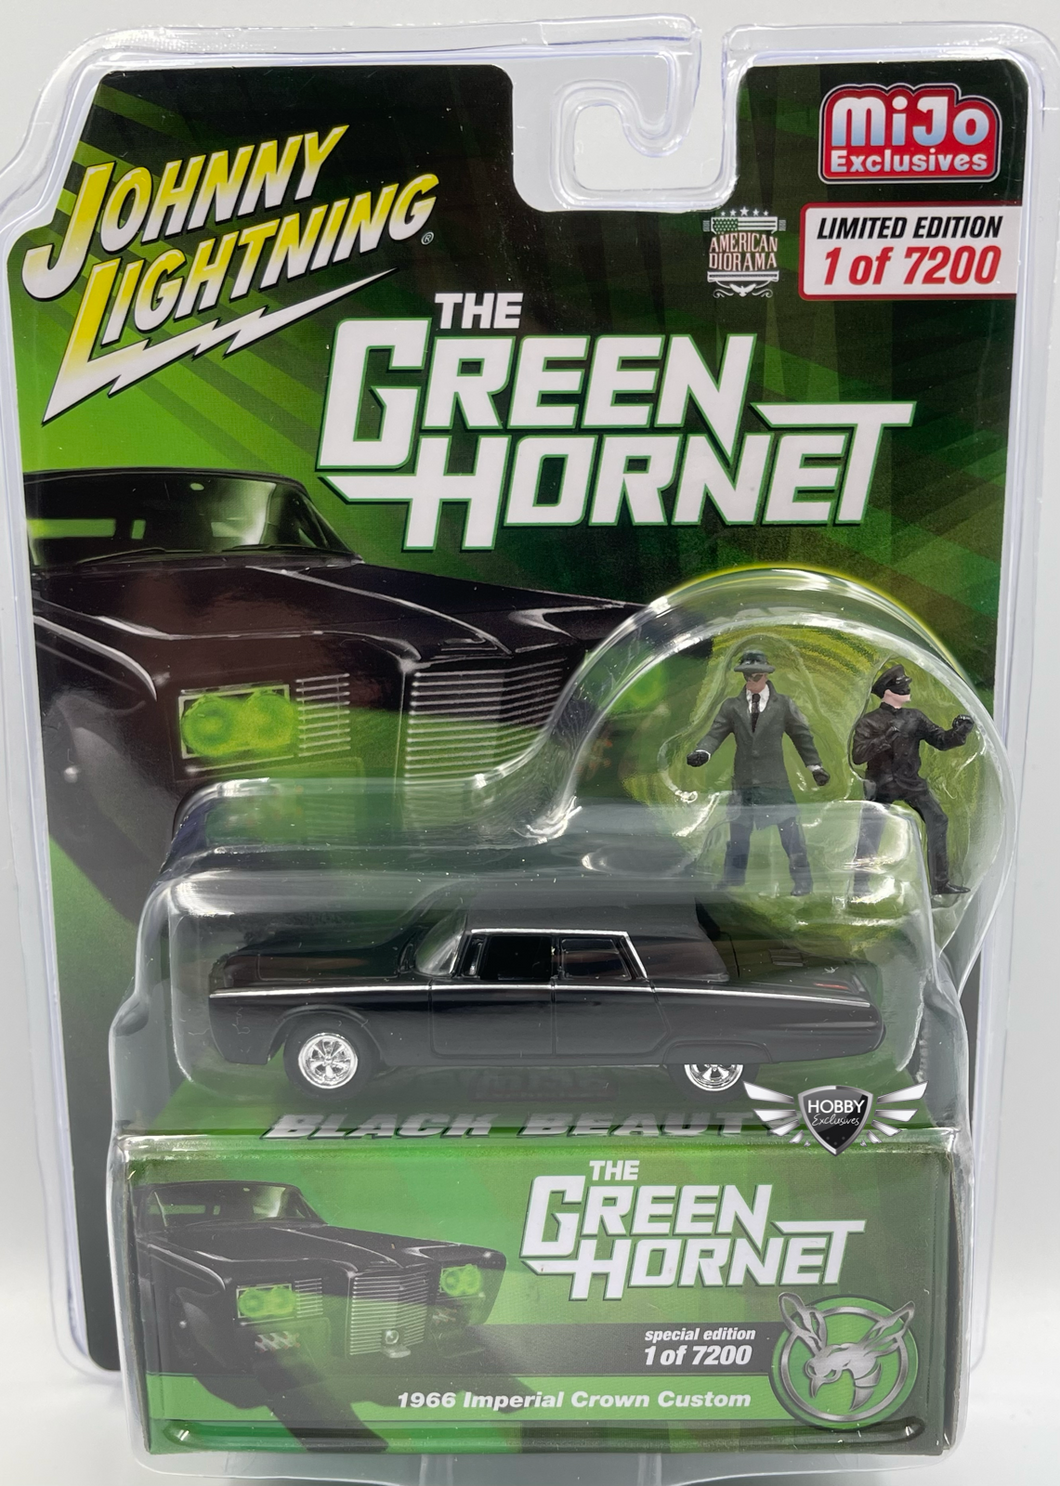 1966 Imperial Crown Custom THE GREEN HORNET W/ Figiures MiJo Exclusive Johnny Lightning